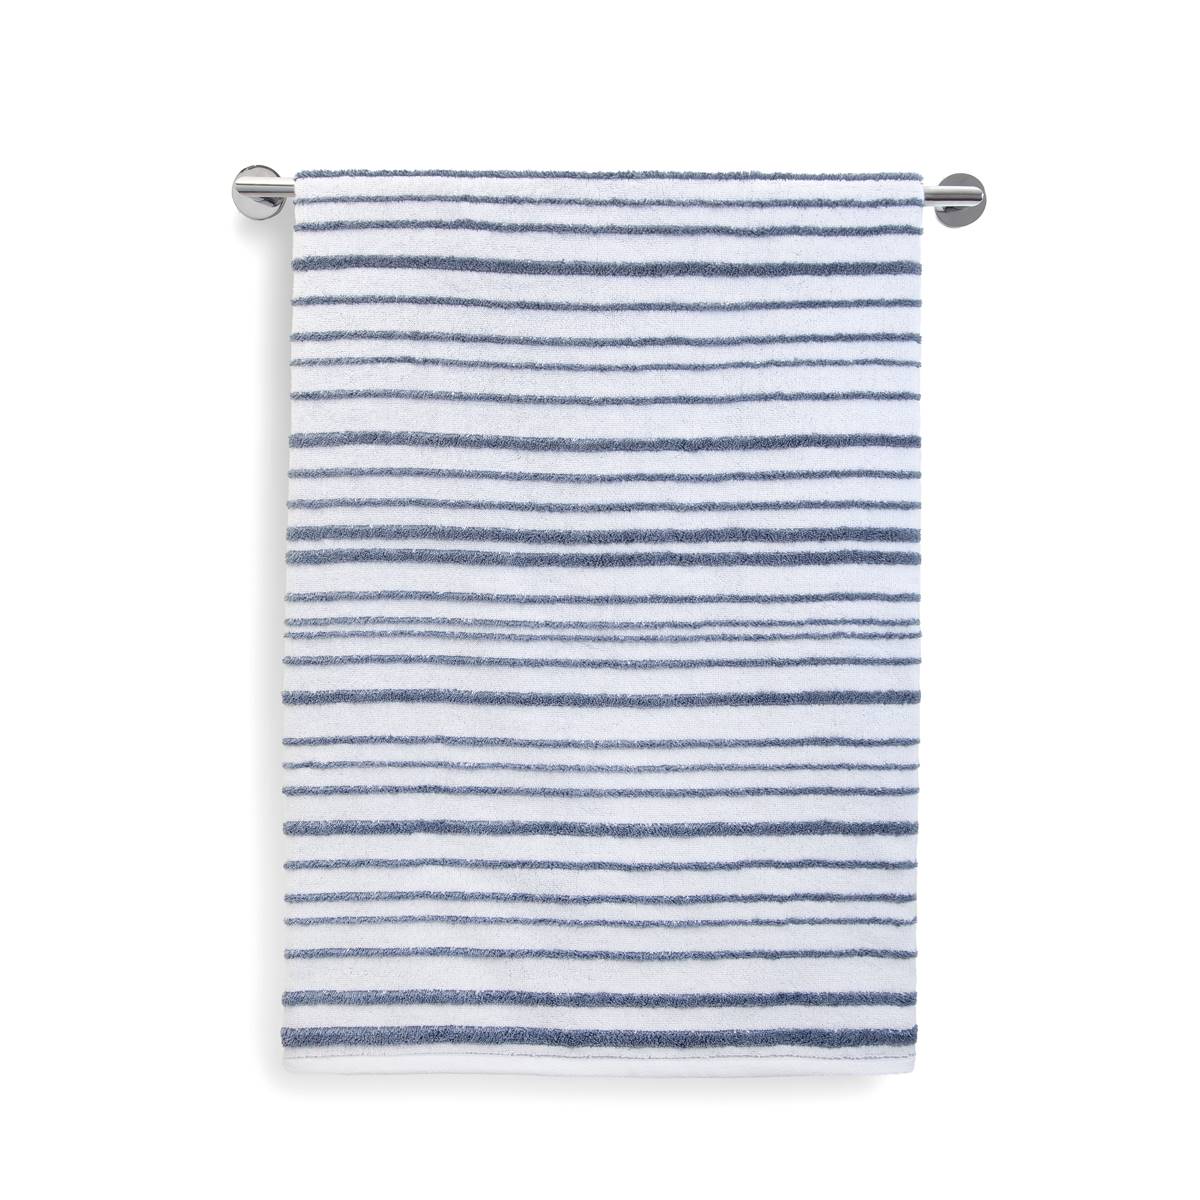 Cassadecor Urbane Stripe Bath Towel Collection